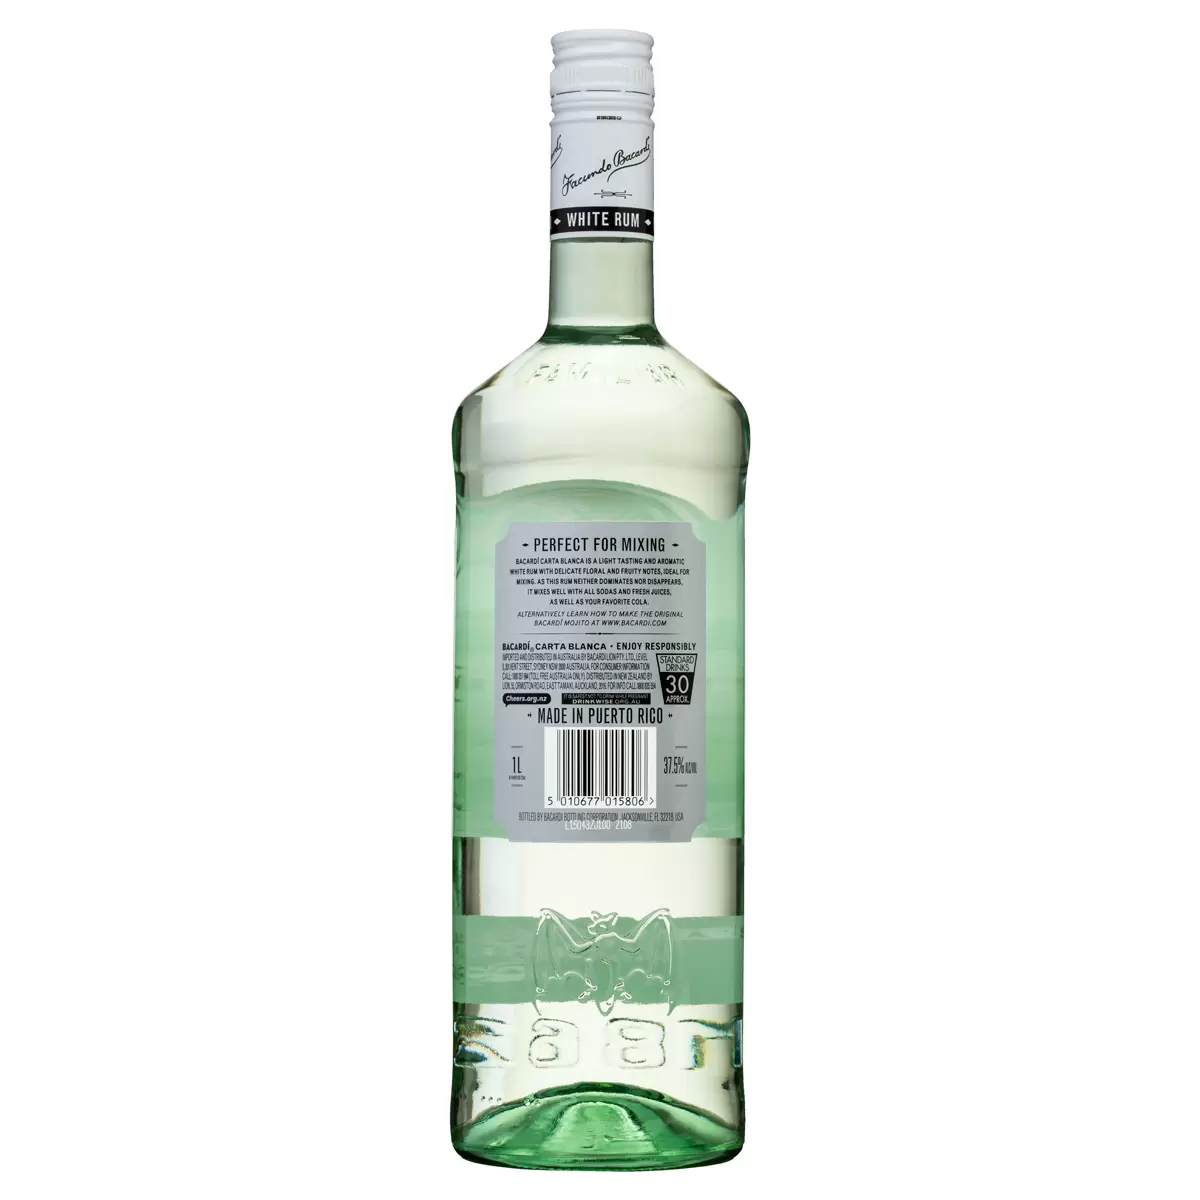 Bacardi Carta Blanca Superior White Rum 1L